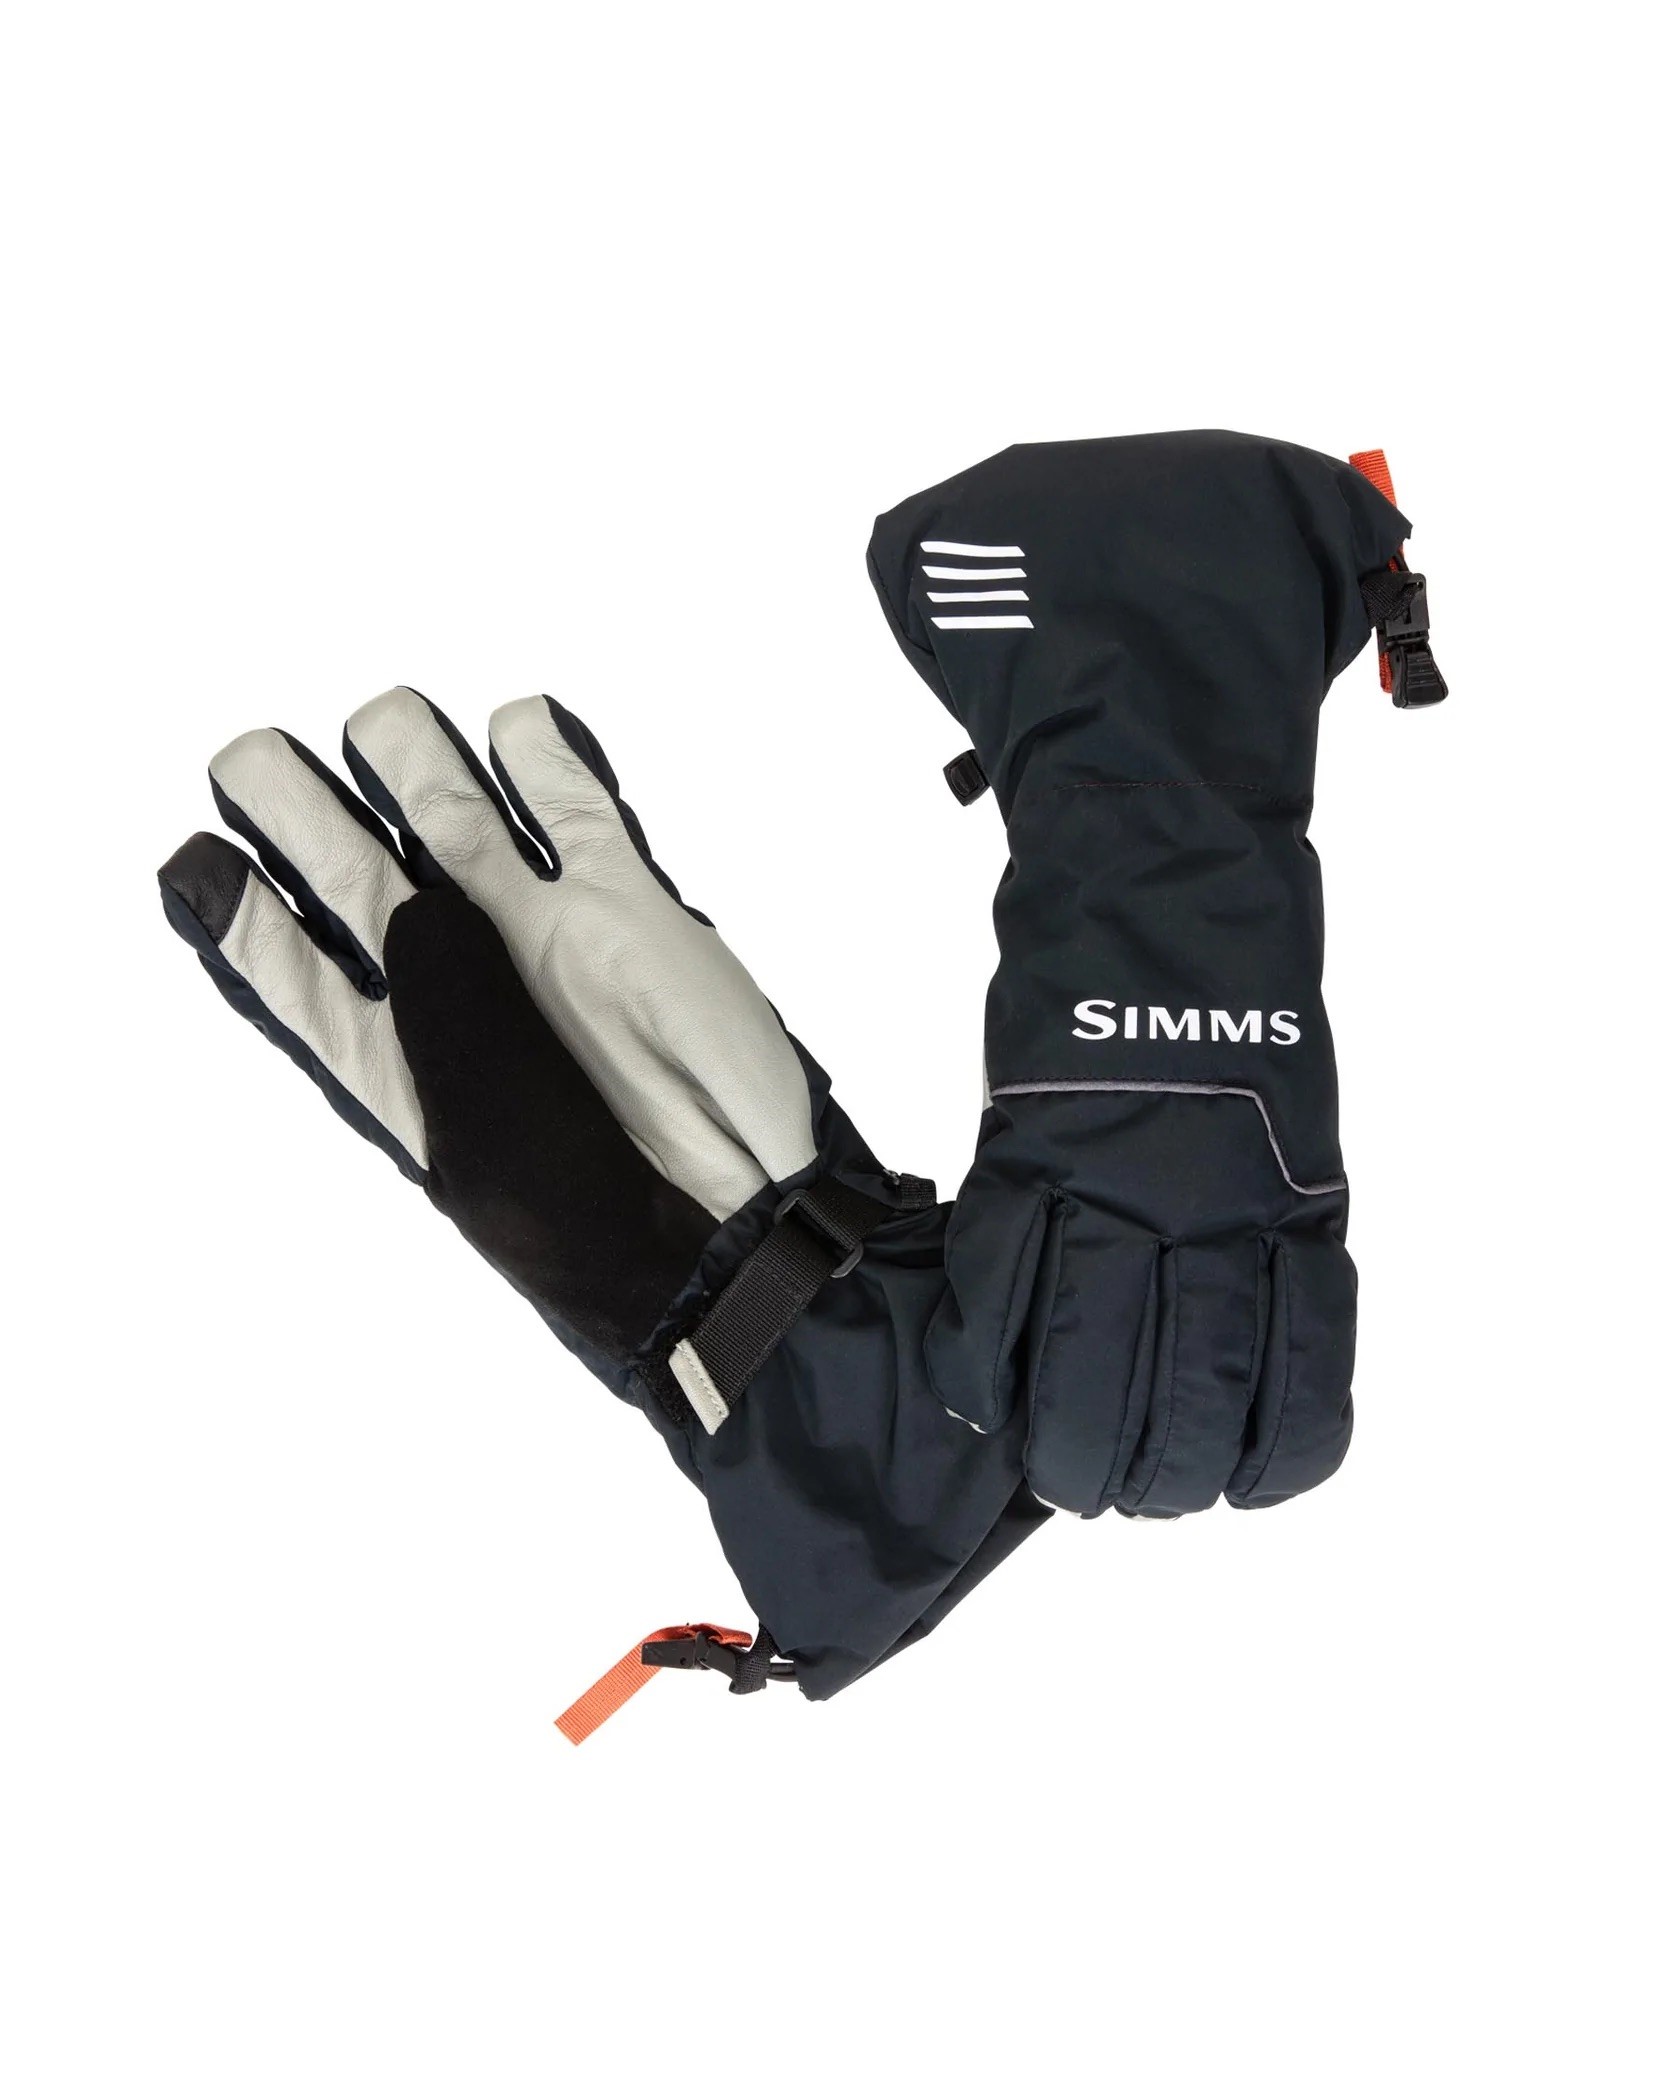 Simms Challenger Insulated Glove - Black - Medium